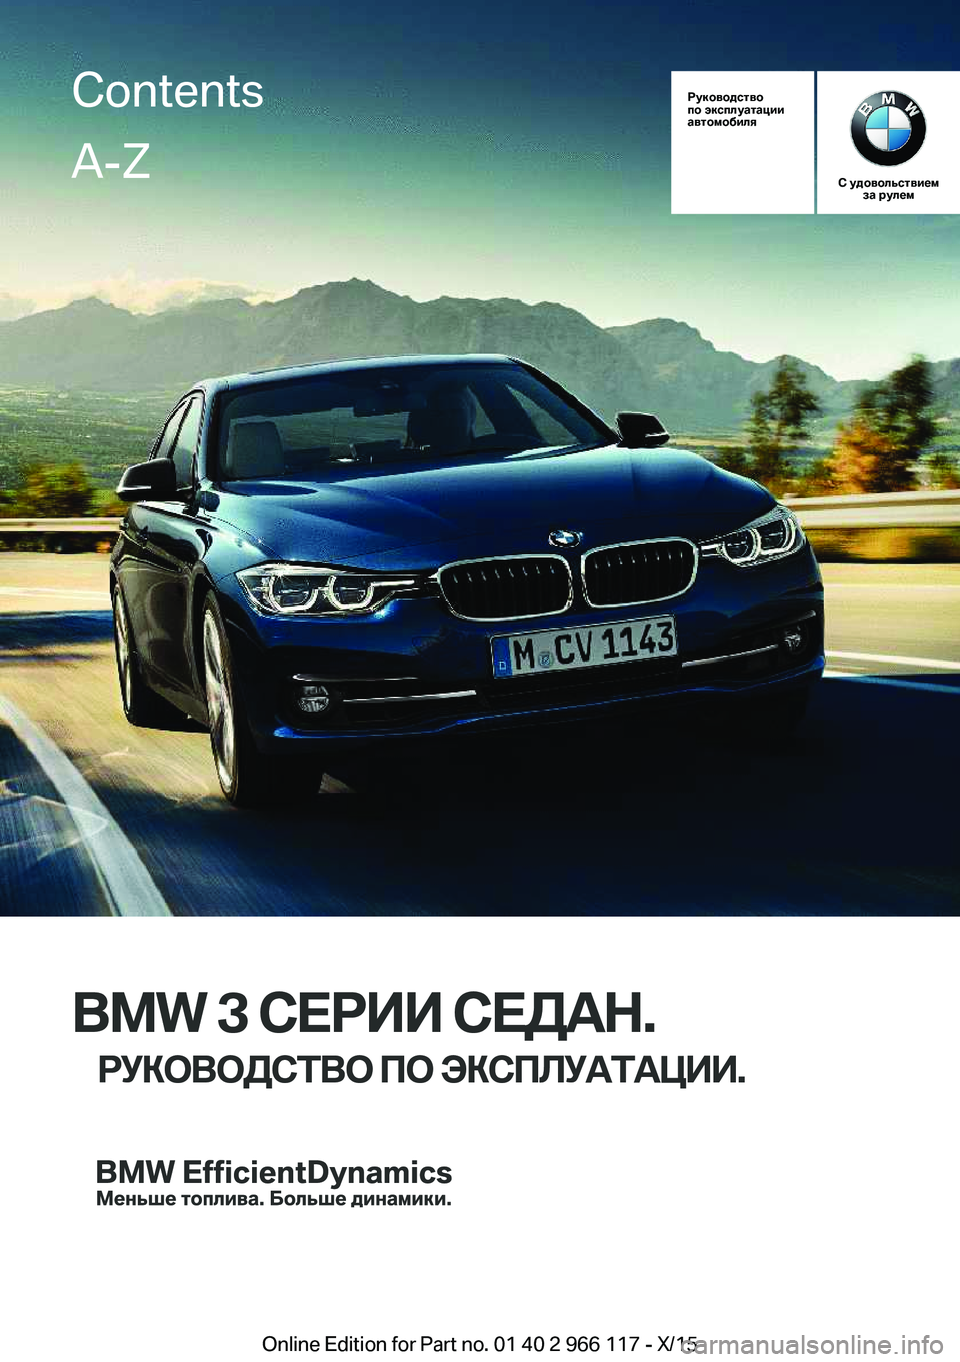 BMW 3 SERIES 2016  Руково Руководство
по эксплуатации
автомобиля
С удовольствием за рулем
BMW 3 СЕРИИ СЕДАН.
РУКОВОДСТВО ПО ЭКСПЛУАТАЦИ�